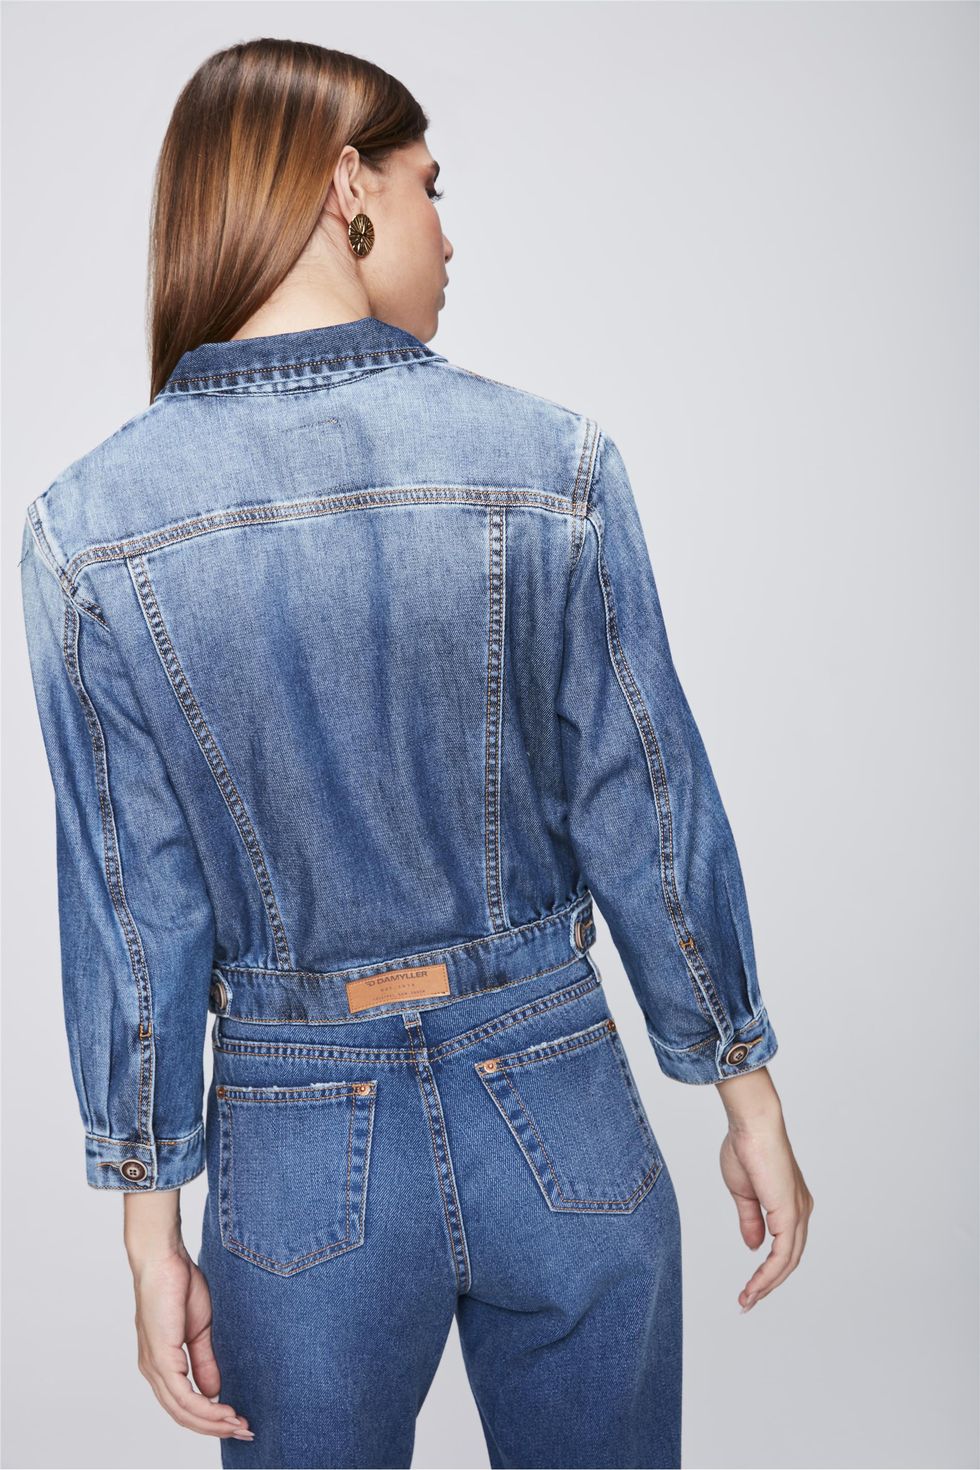 jaqueta jeans feminina damyller